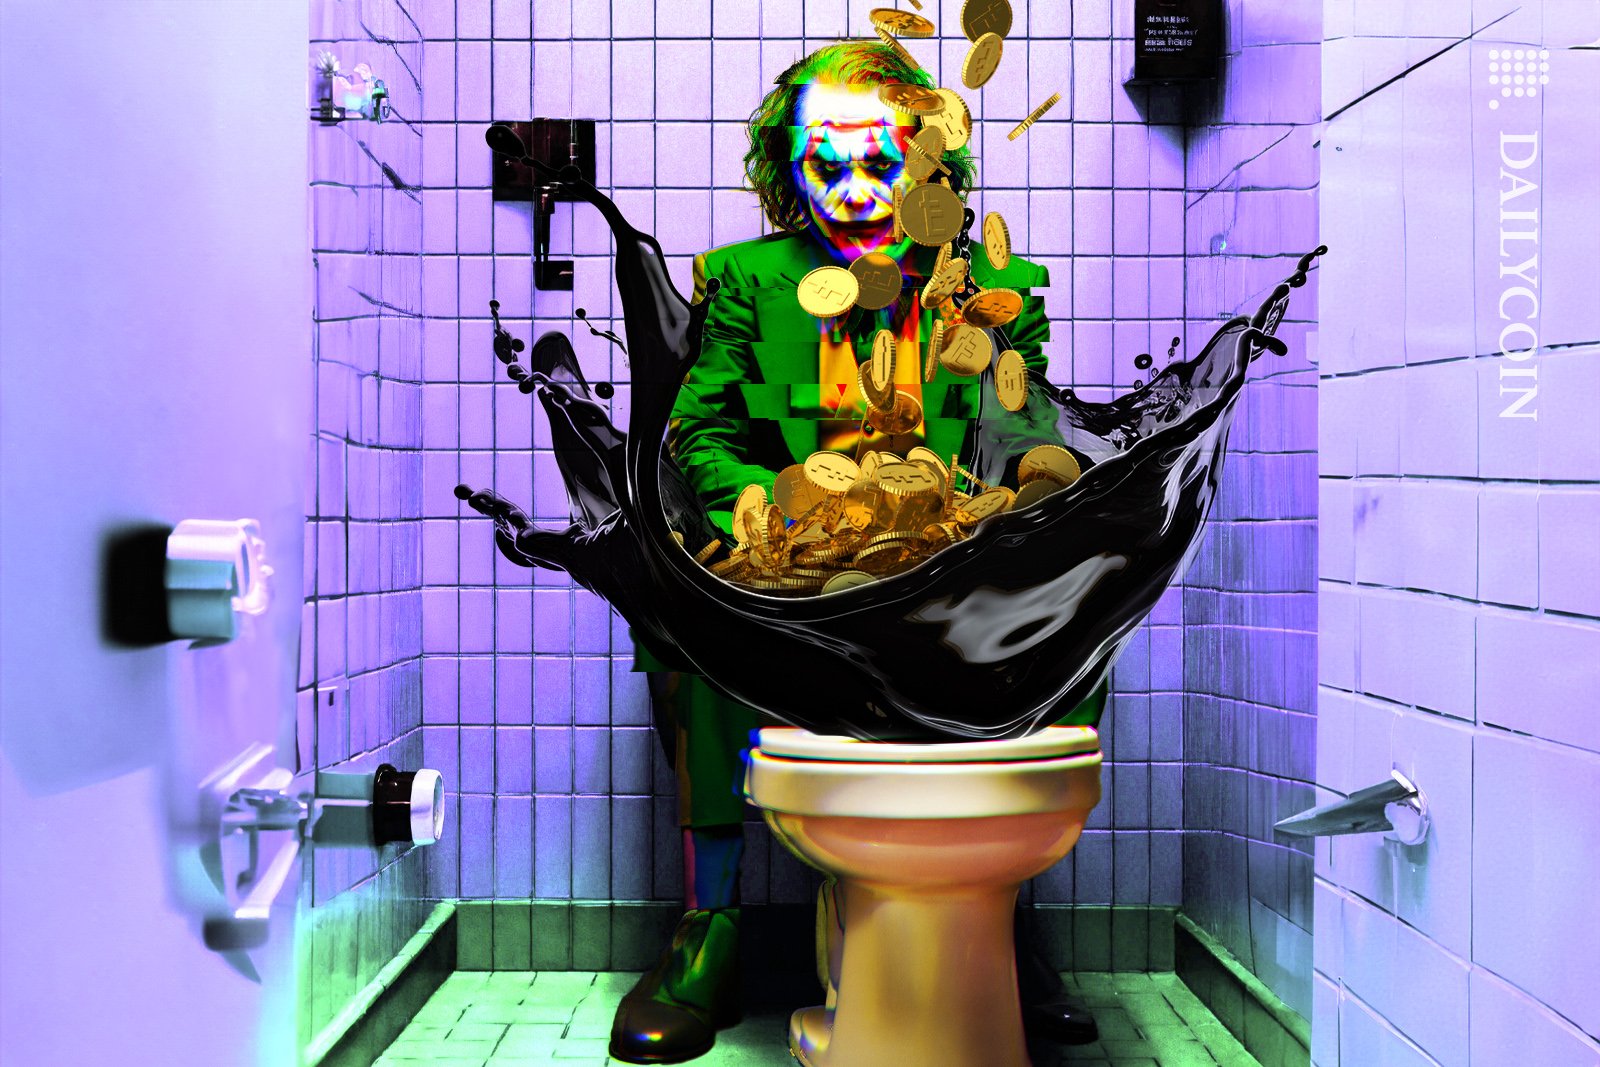 Joker sitting next to toilet flushing coins down.